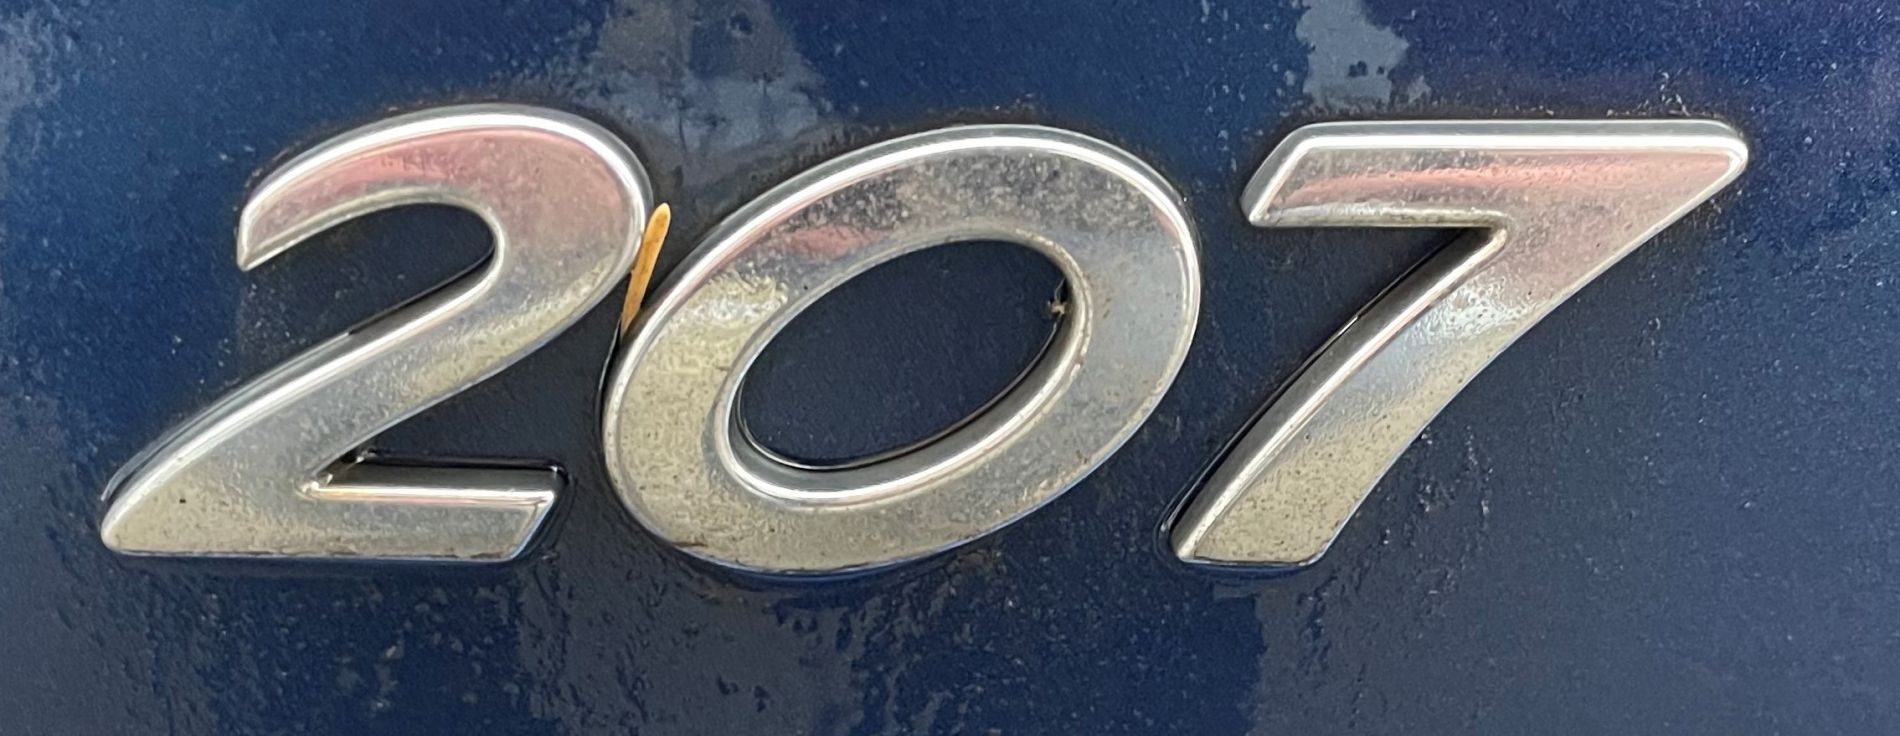 Dorobienie klucza do auta Peugeot 207